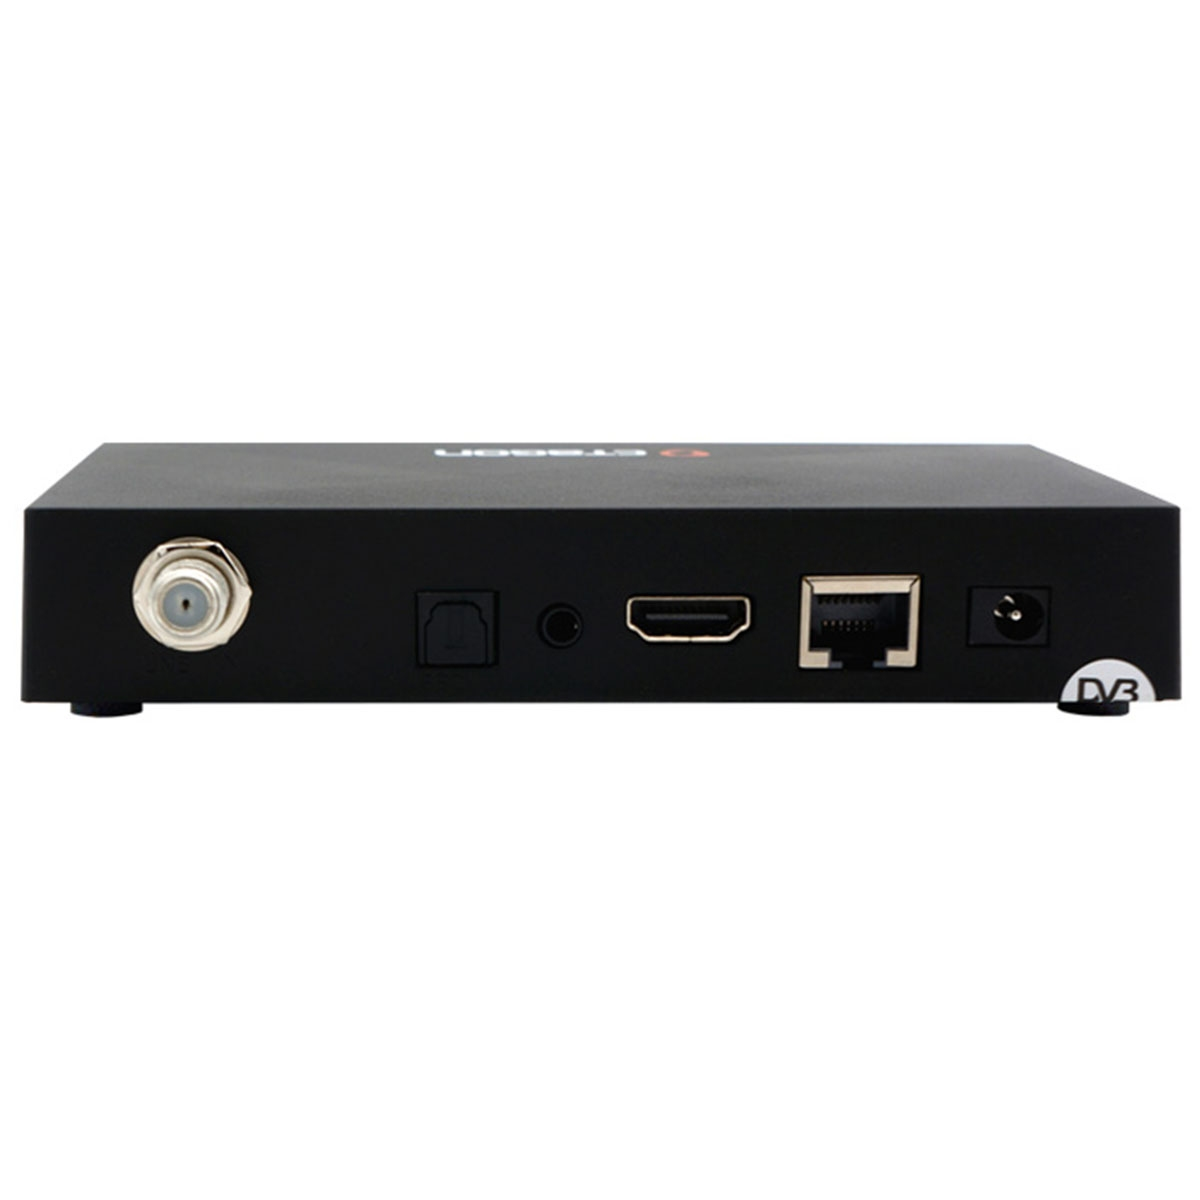 Full IP Receiver Receiver IP LAN Sat (Schwarz) Linux H.265 Sat HD SX89 OCTAGON Tuner DVB-S2 HDMI